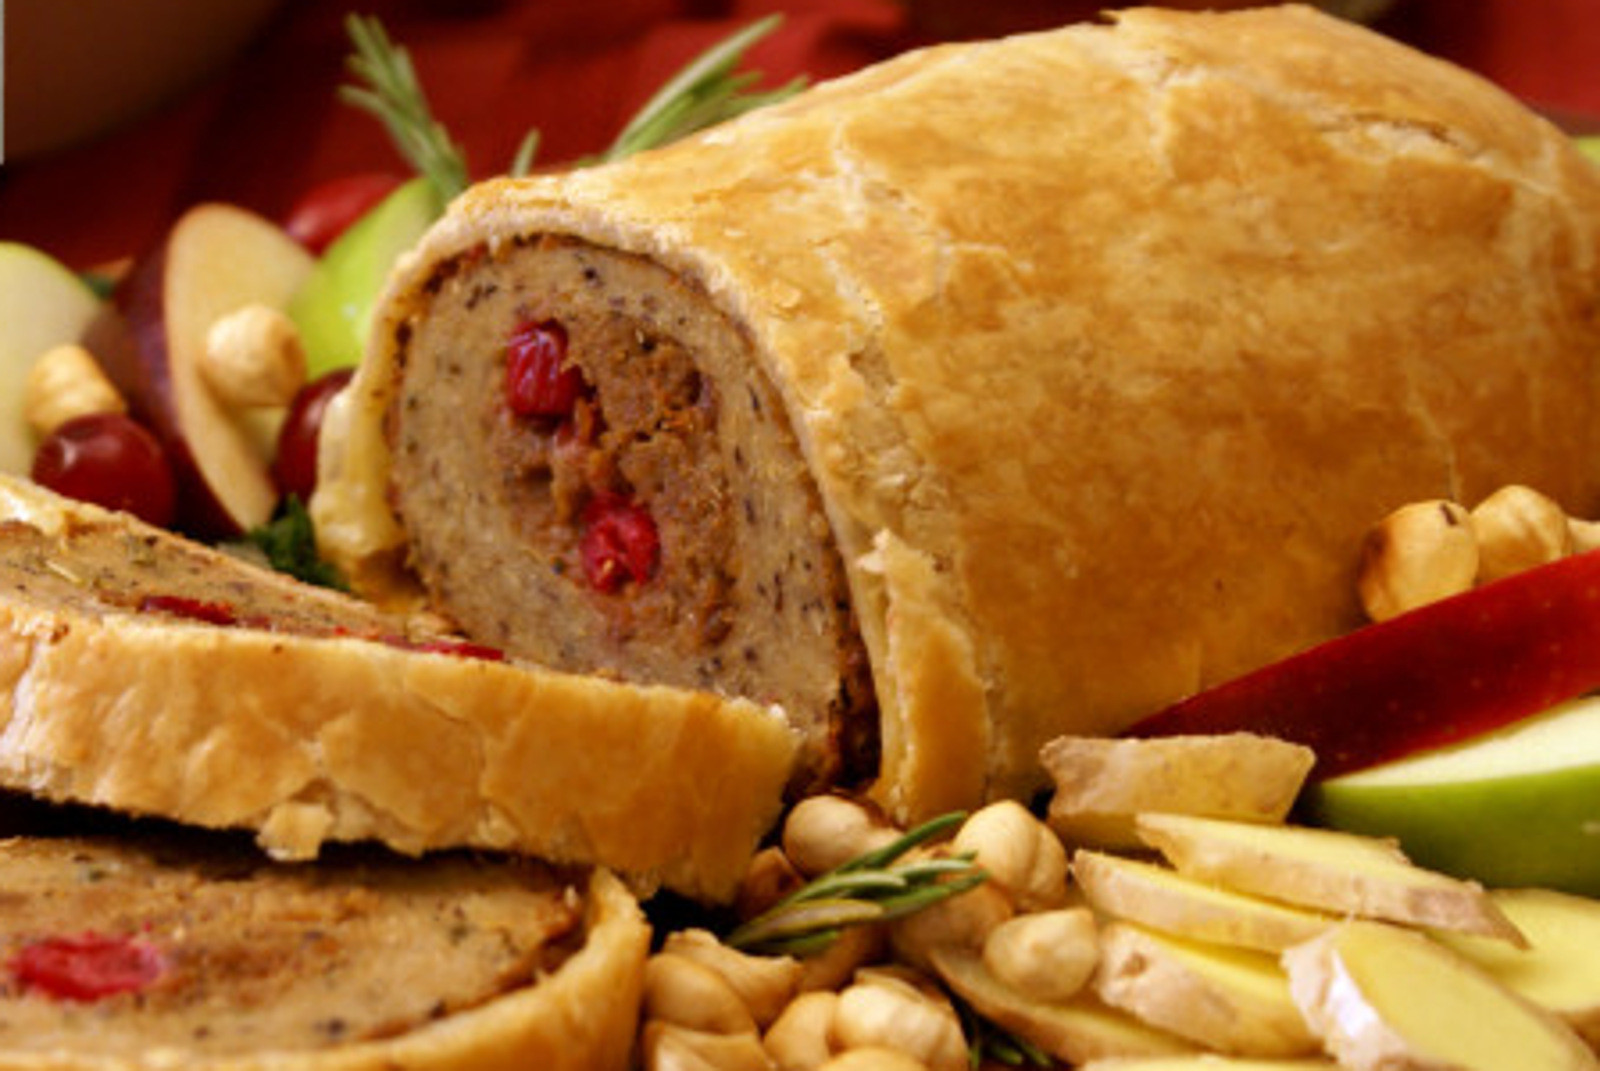 Alternatives To Turkey On Thanksgiving
 The Best Meatless Turkey Alternatives for Thanksgiving